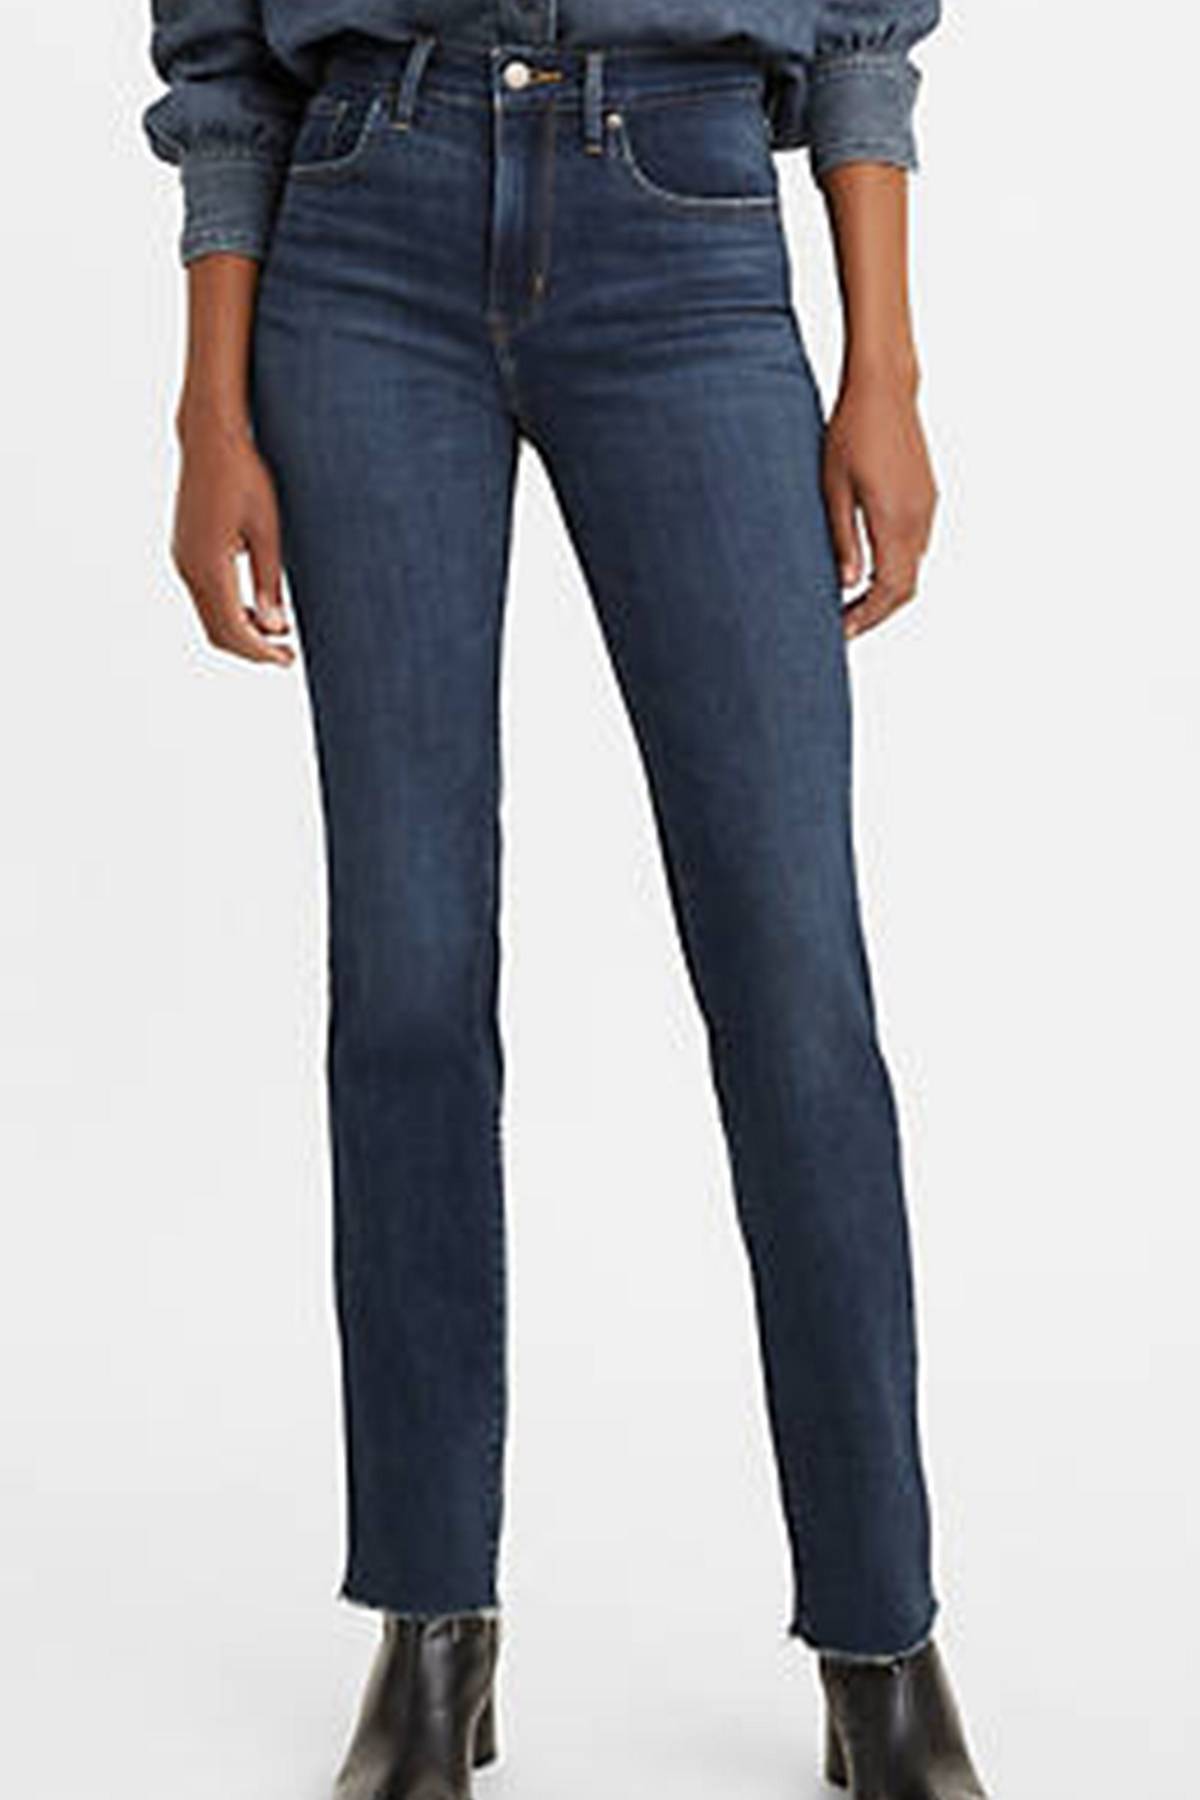 Model wearing 724 High Rise Slim Straight Crop Jeans